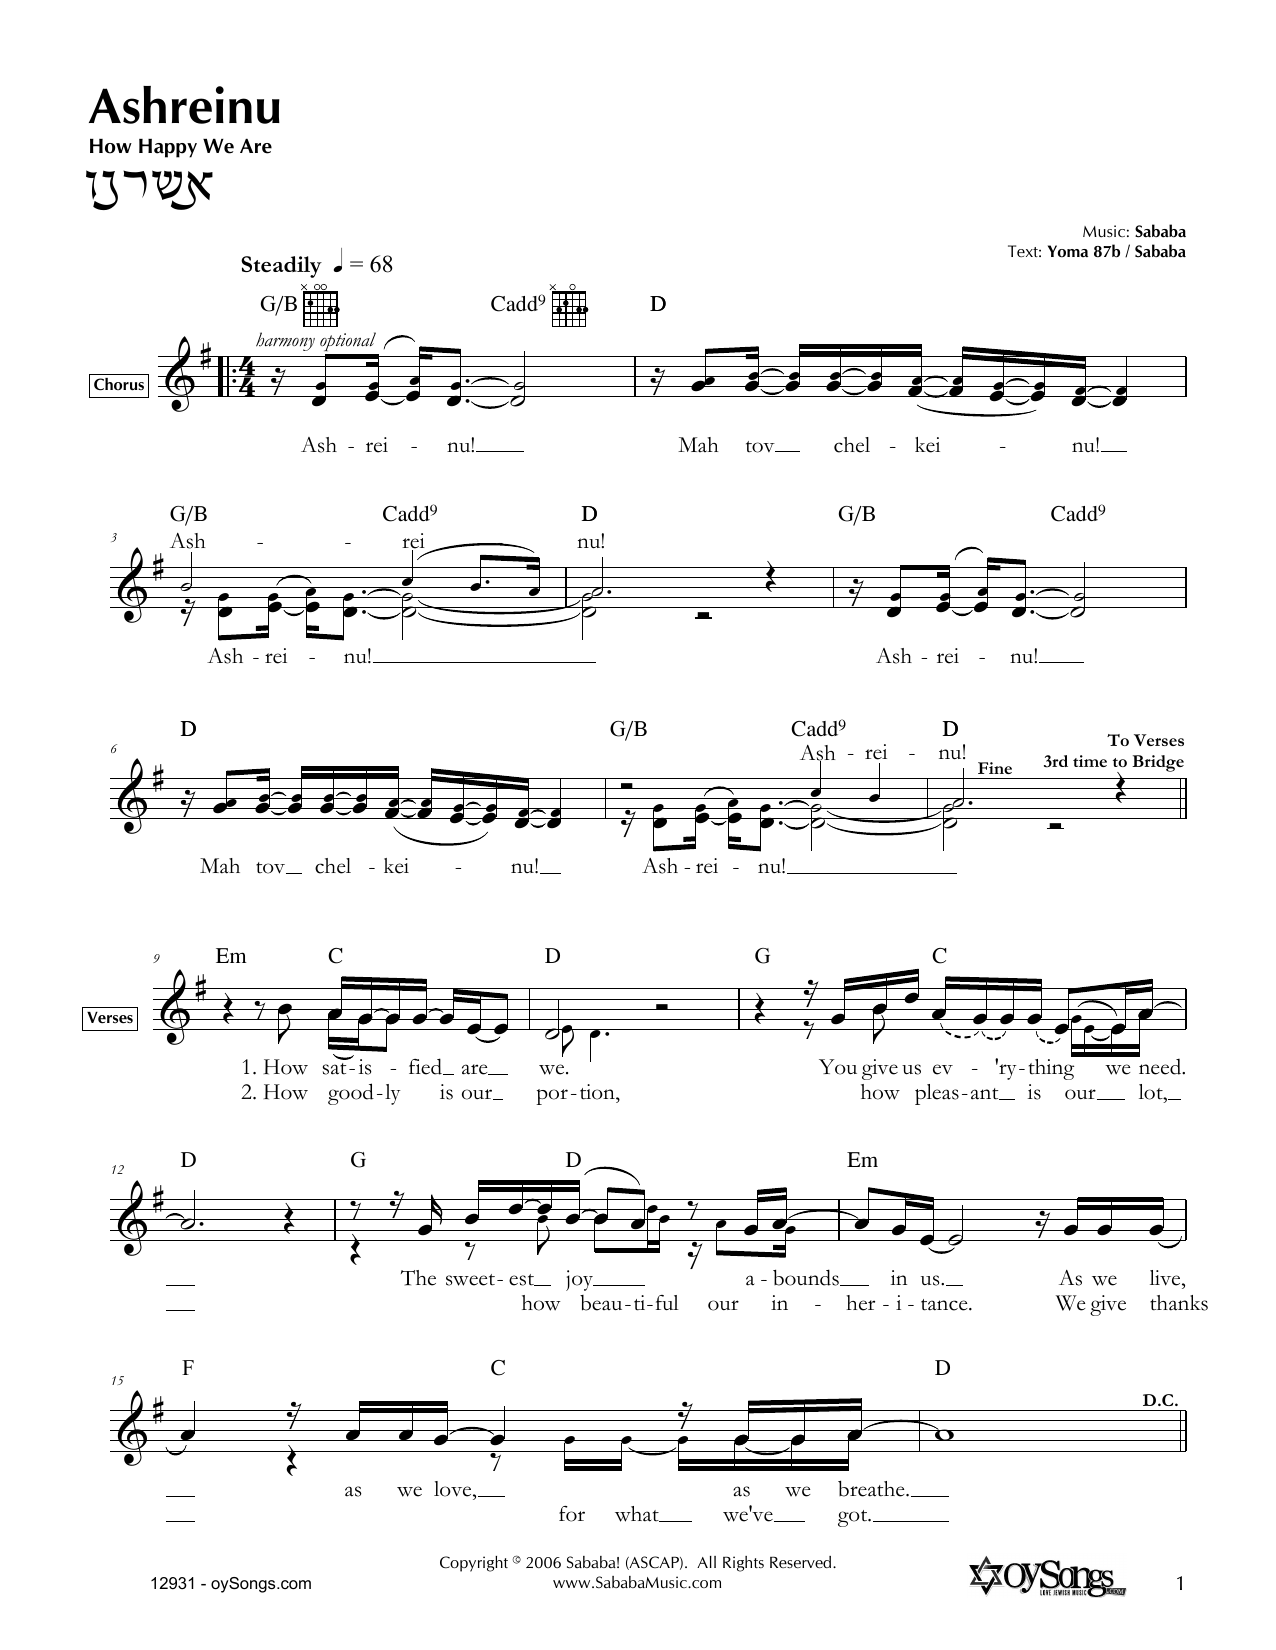 Sababa Ashreinu Sheet Music Notes & Chords for Melody Line, Lyrics & Chords - Download or Print PDF